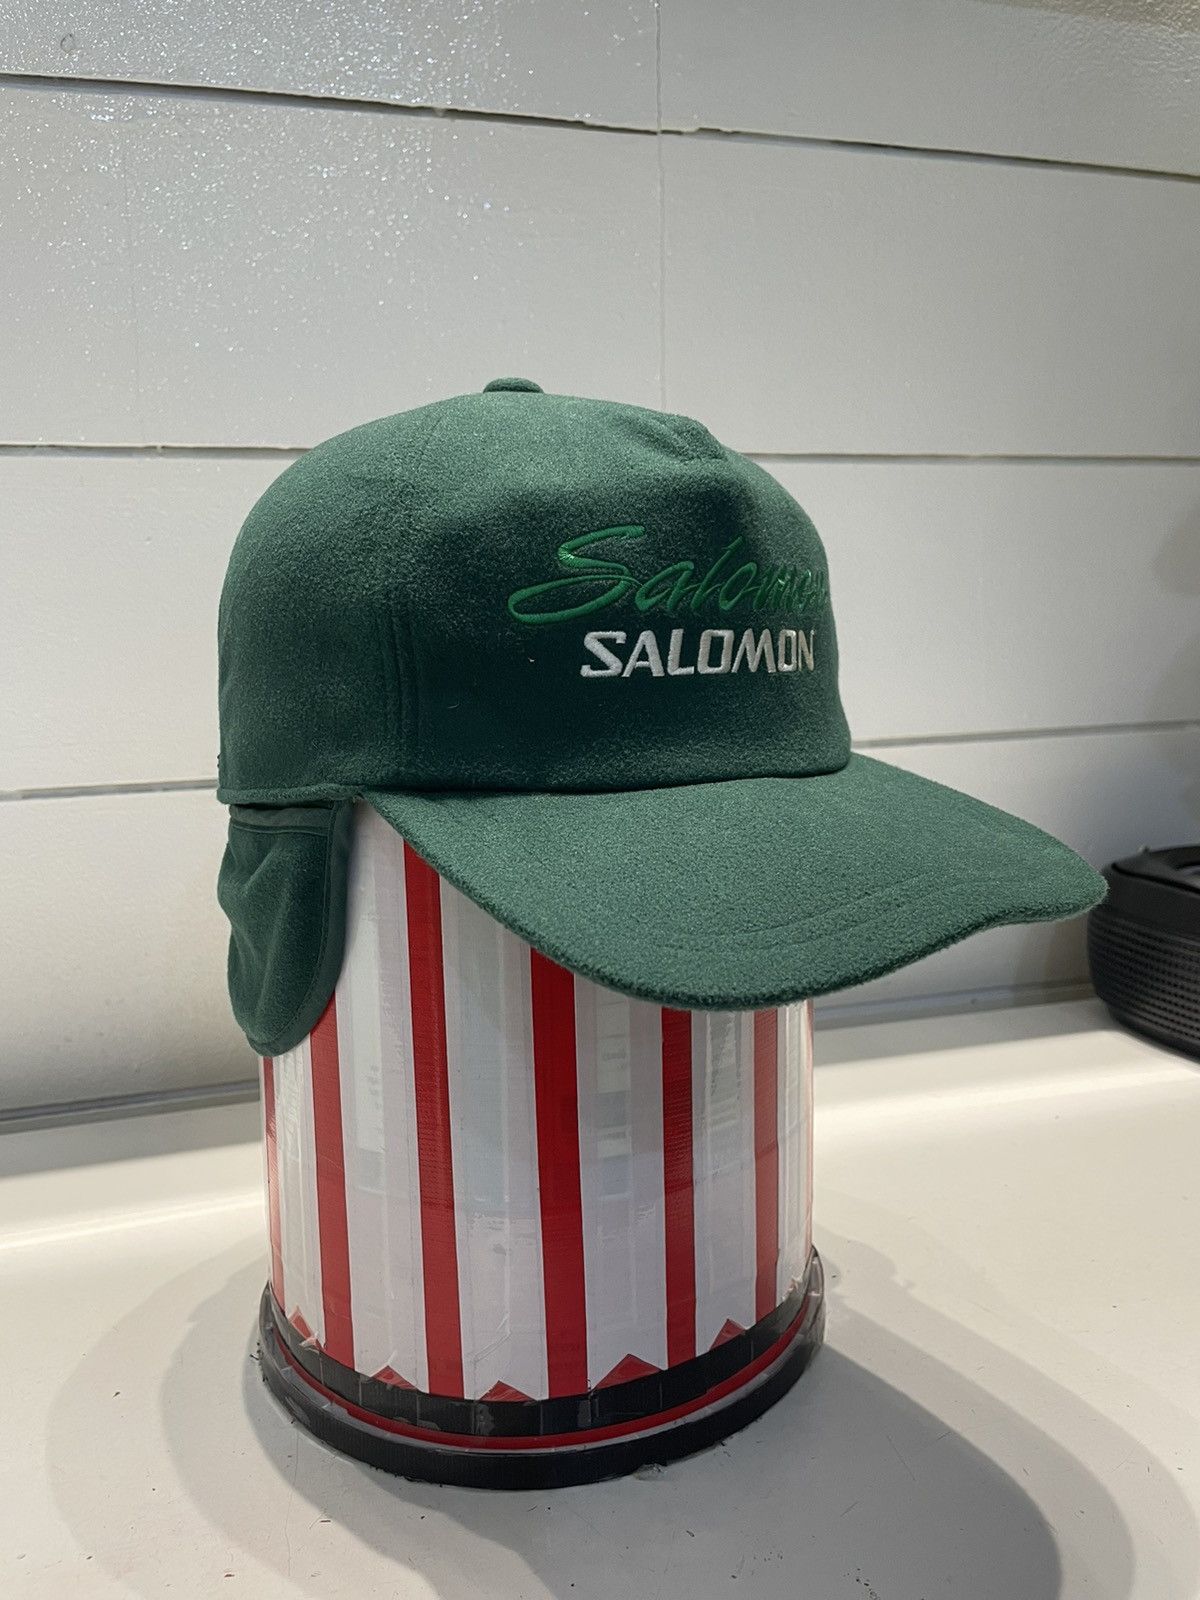 Salomon Vintage Salomon Fleece Flip Ear Hat | Grailed